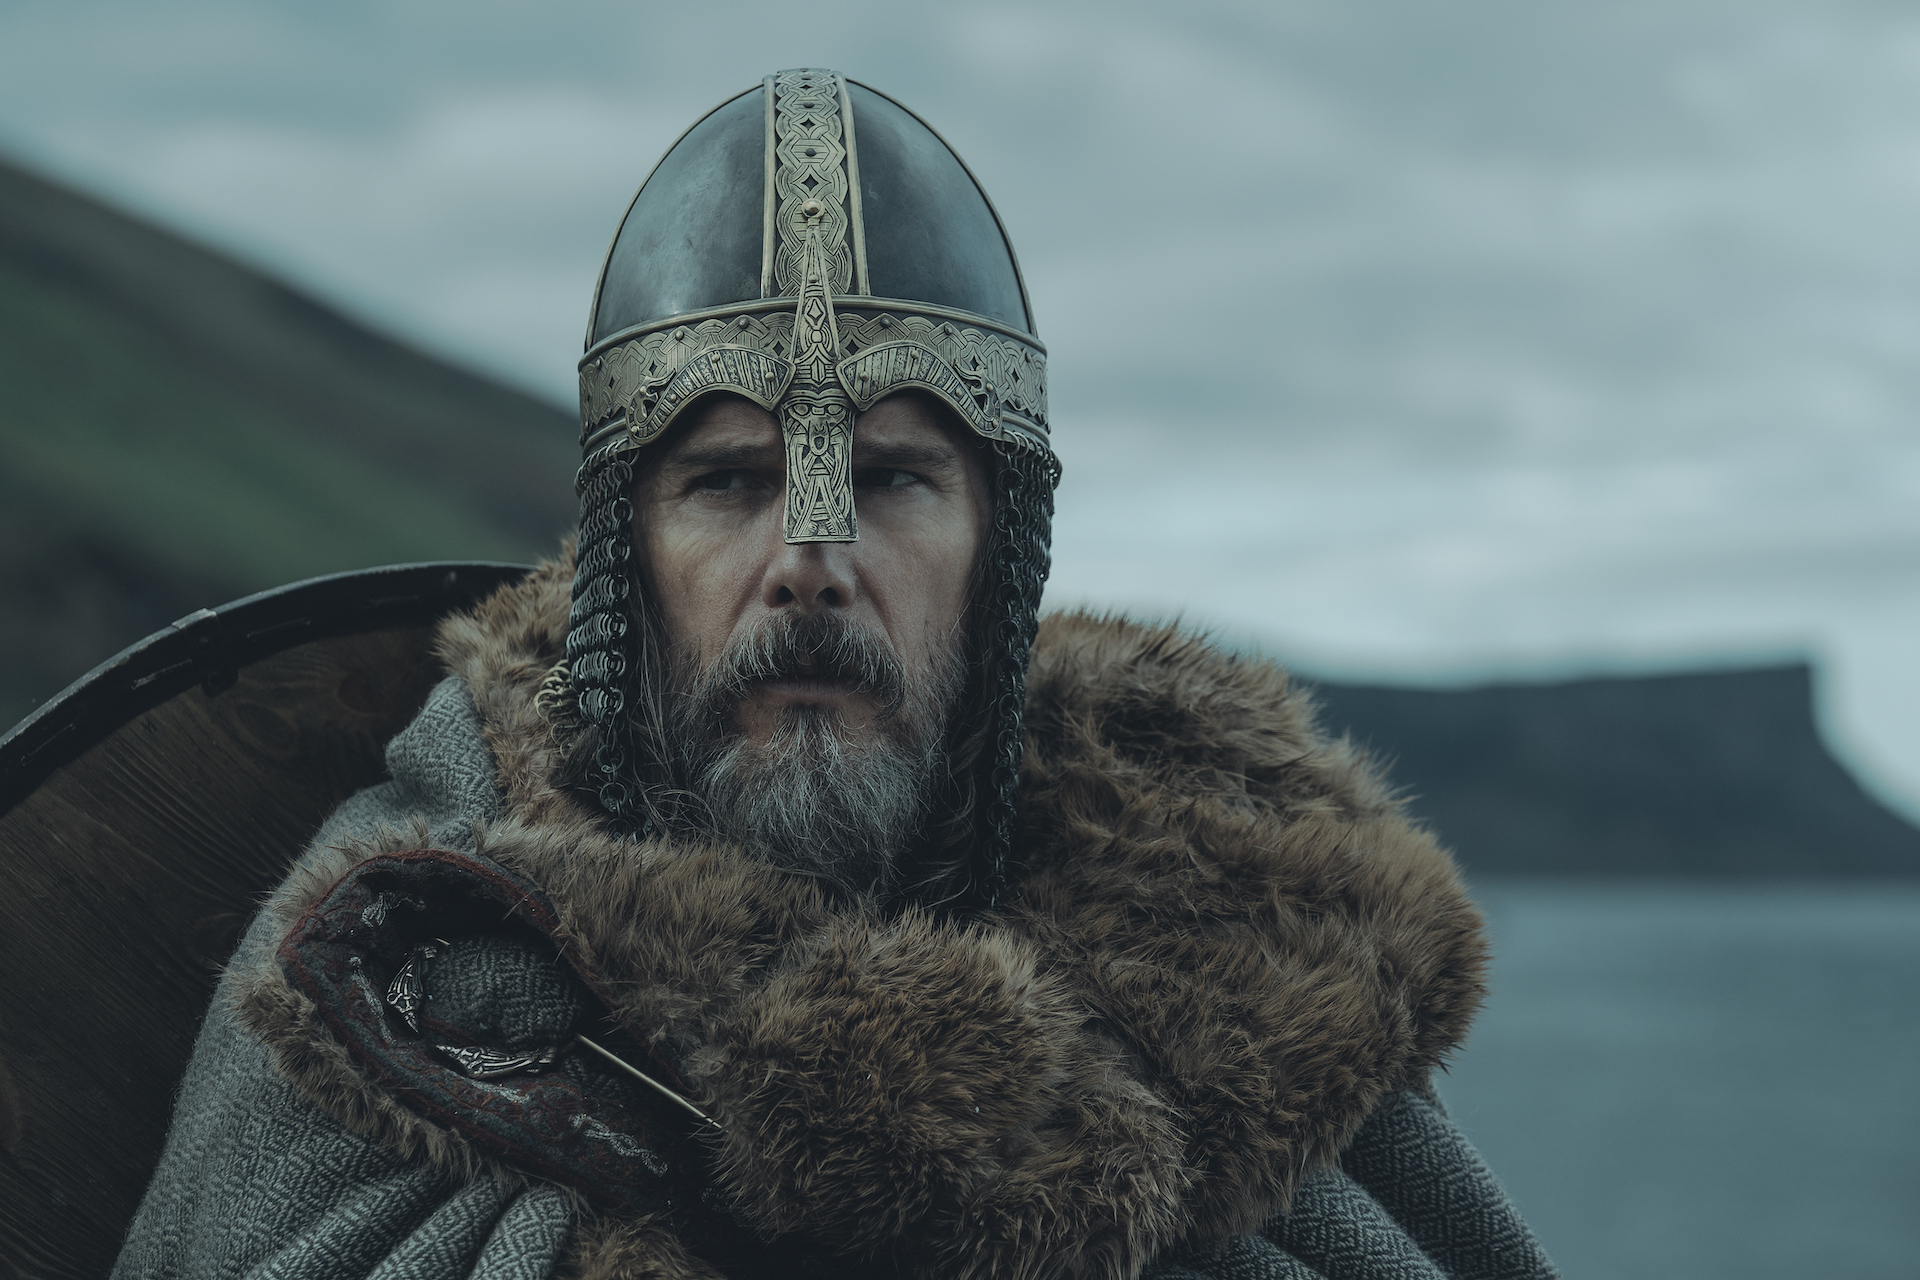 Ethan Hawke stars as King Aurvandil in The Northman